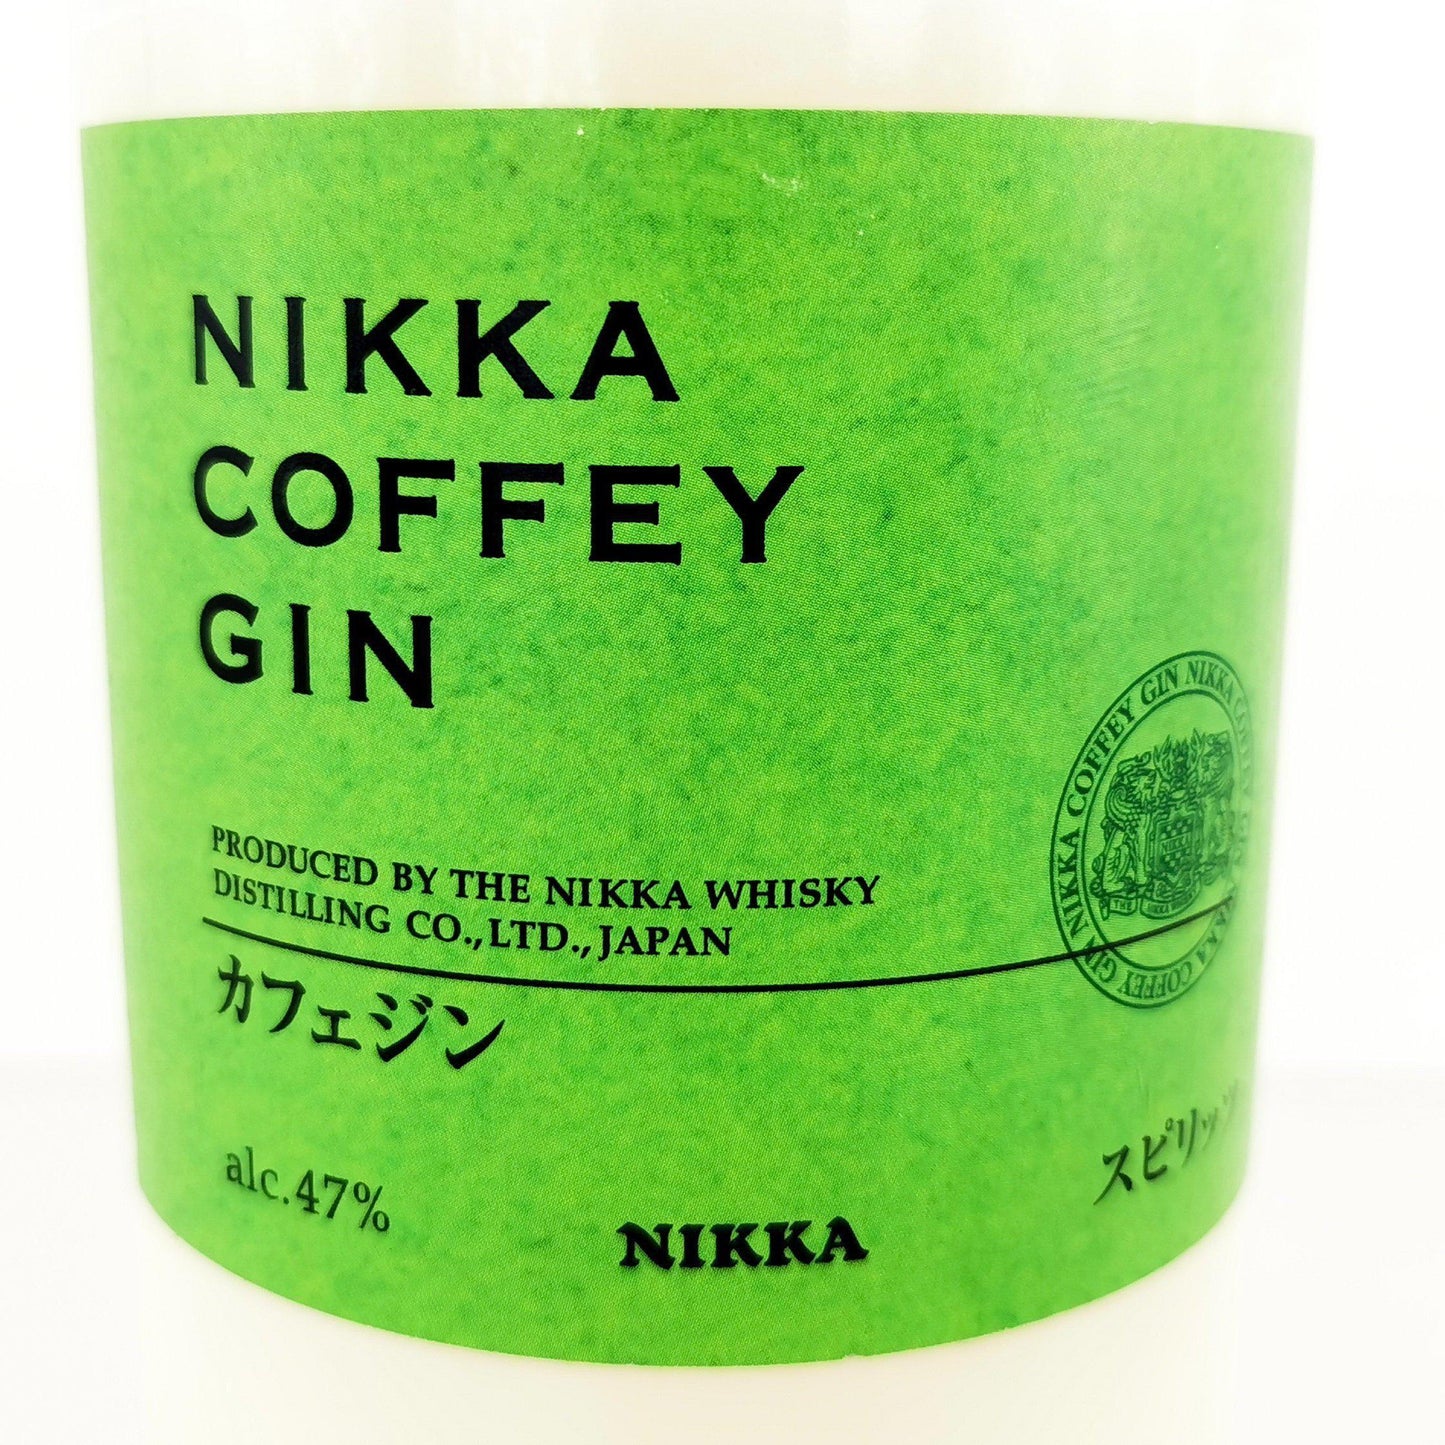 Nikka Coffey Gin Bottle Candle-Gin Bottle Candles-Adhock Homeware